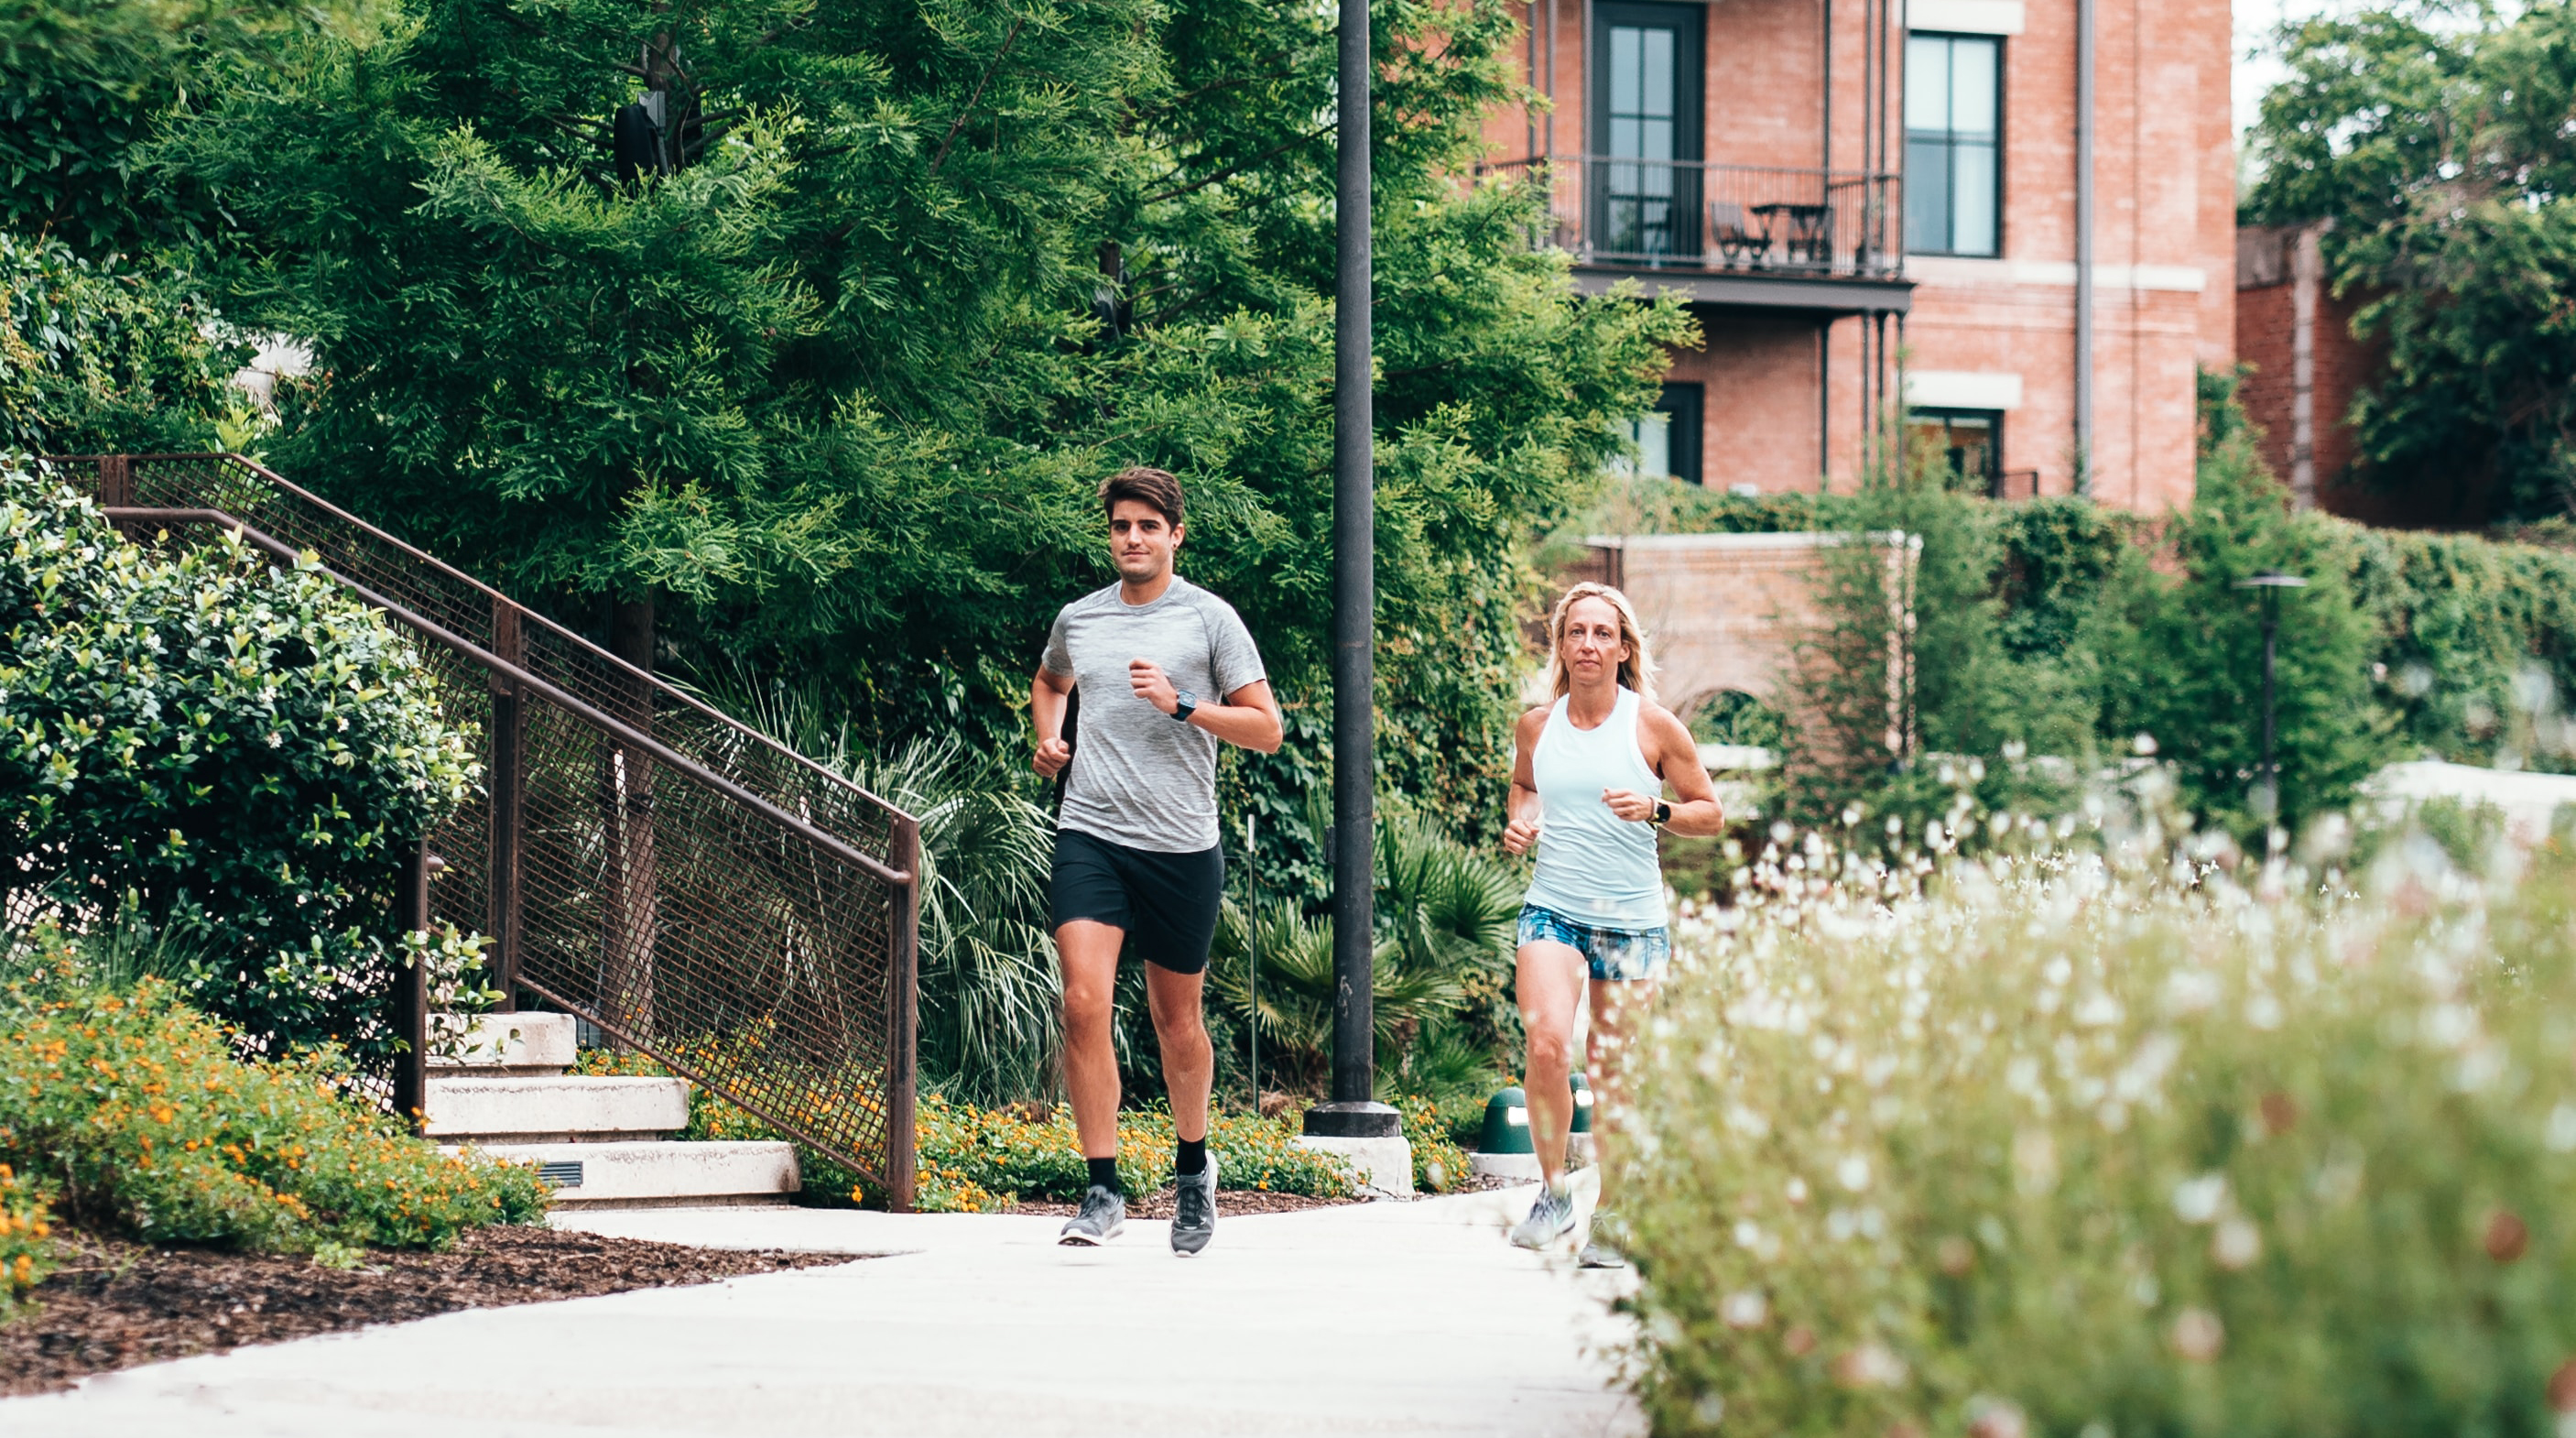 A man and woman running through an inner city suburb